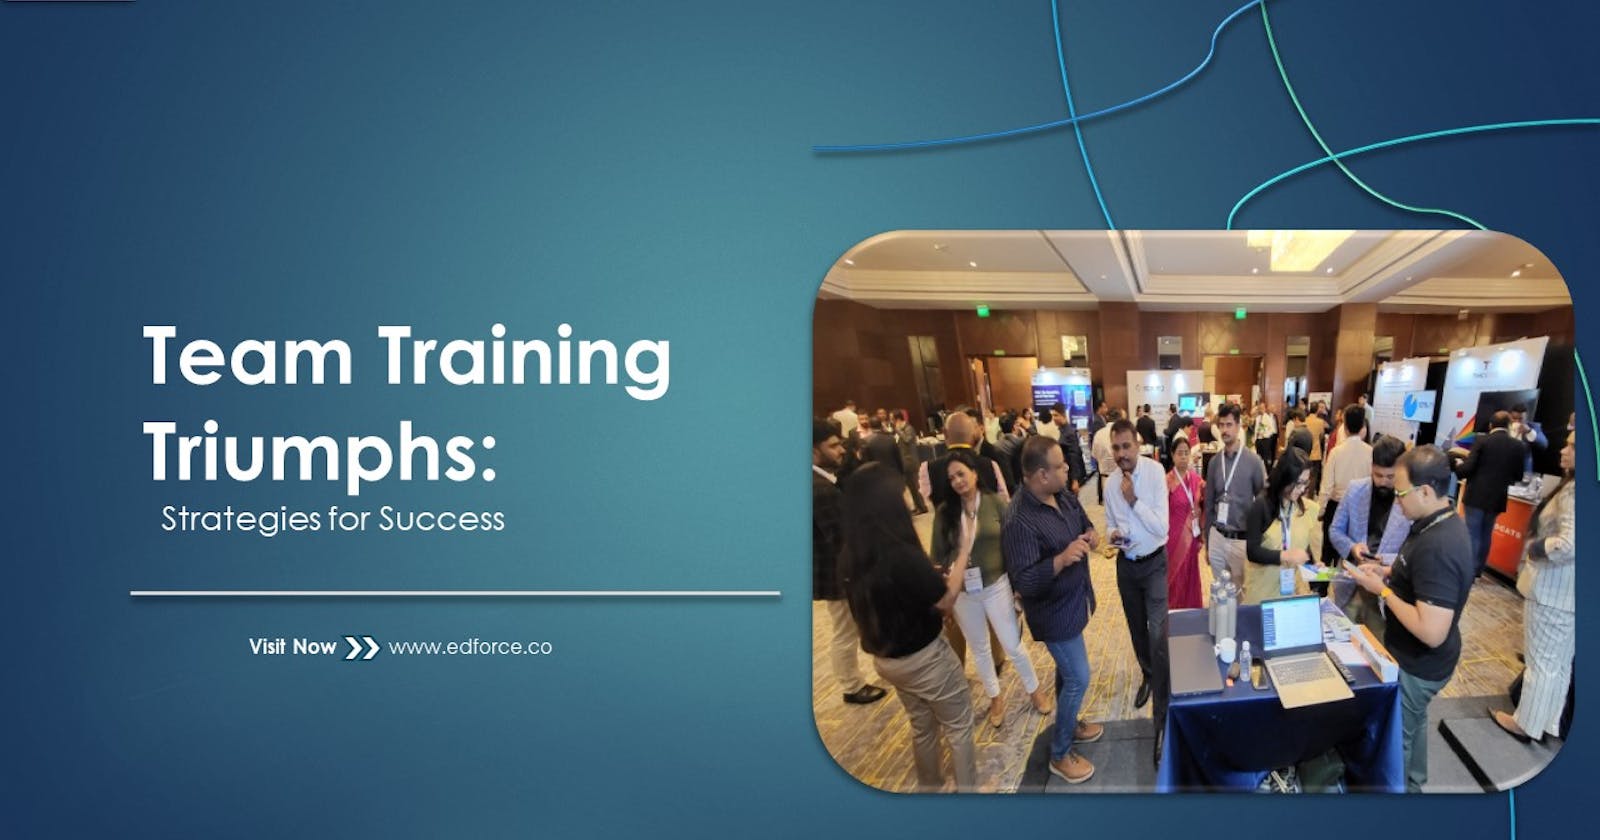 Team Training Triumphs: Strategies for Success